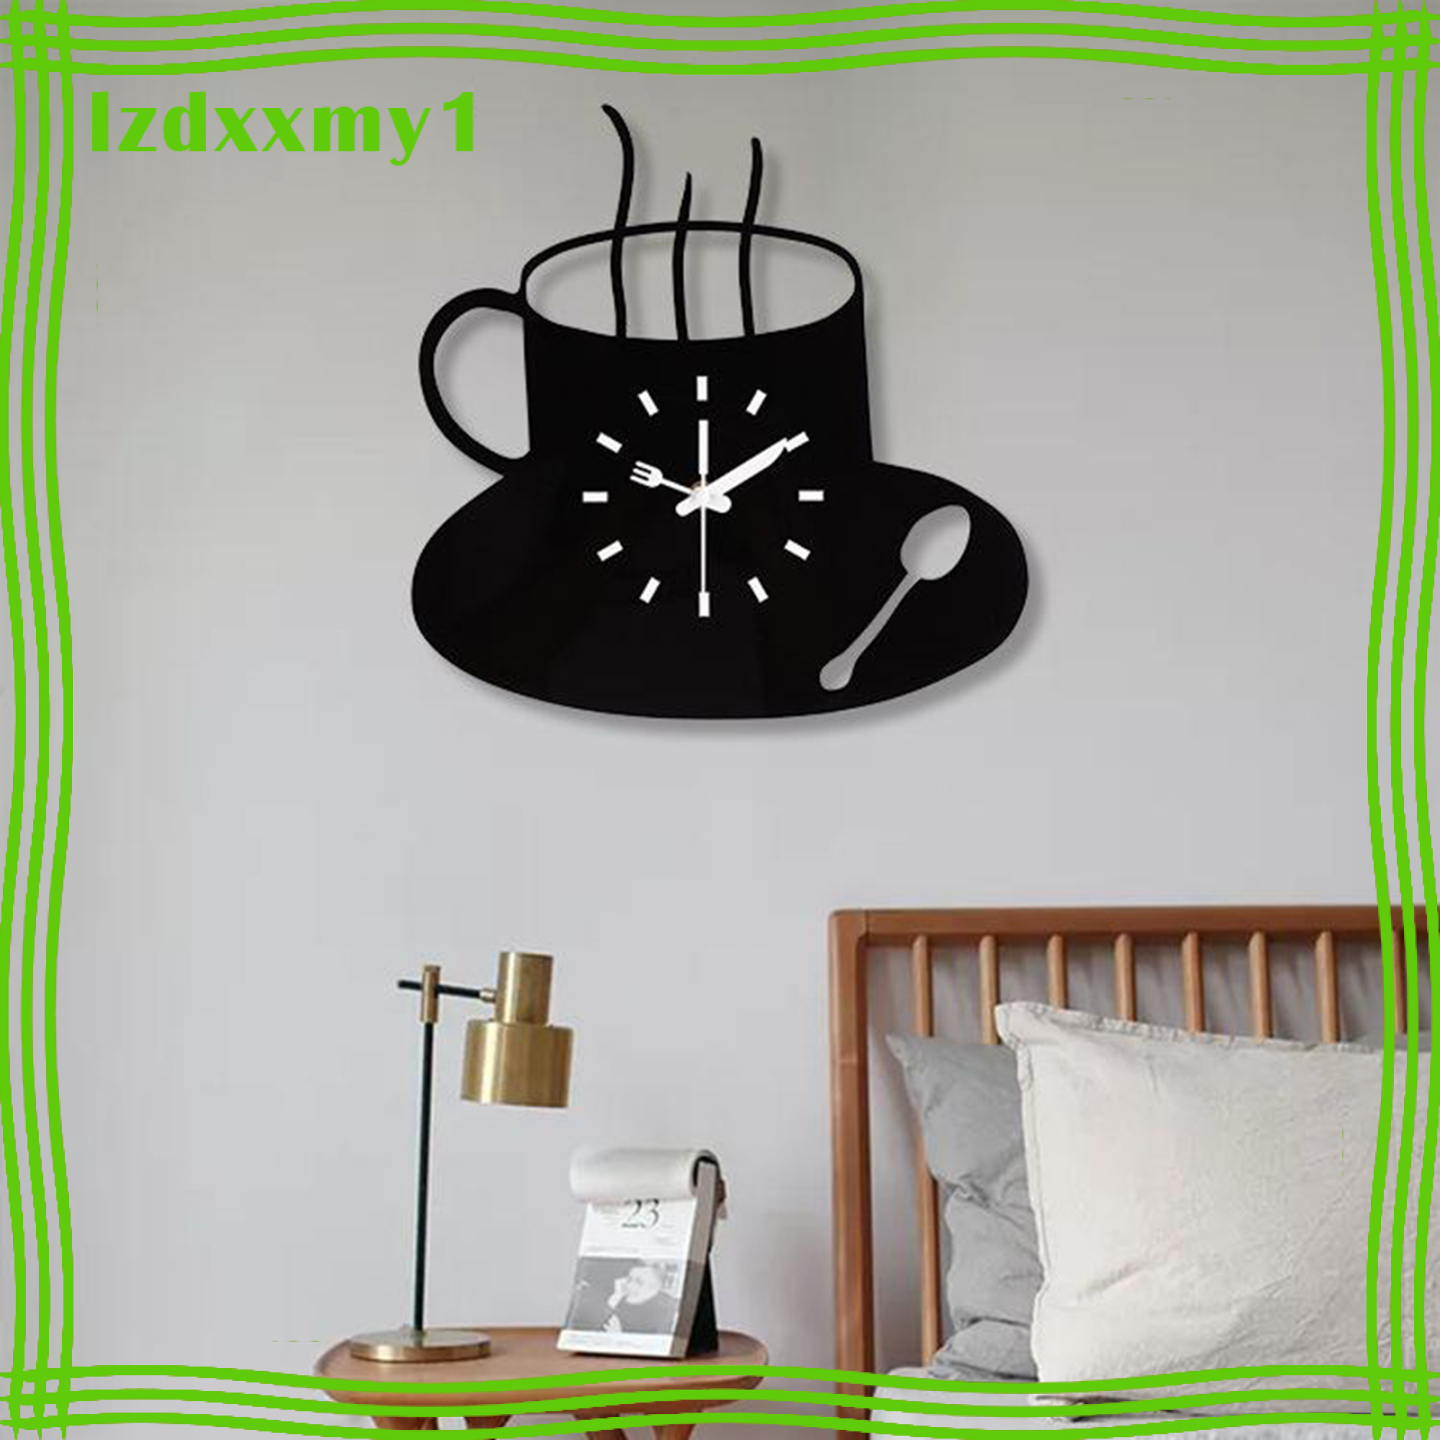 Kiddy Creative 12\'\' Wall Clock Mute Decorative Wall Clocks Cafe No-Ticking Watch